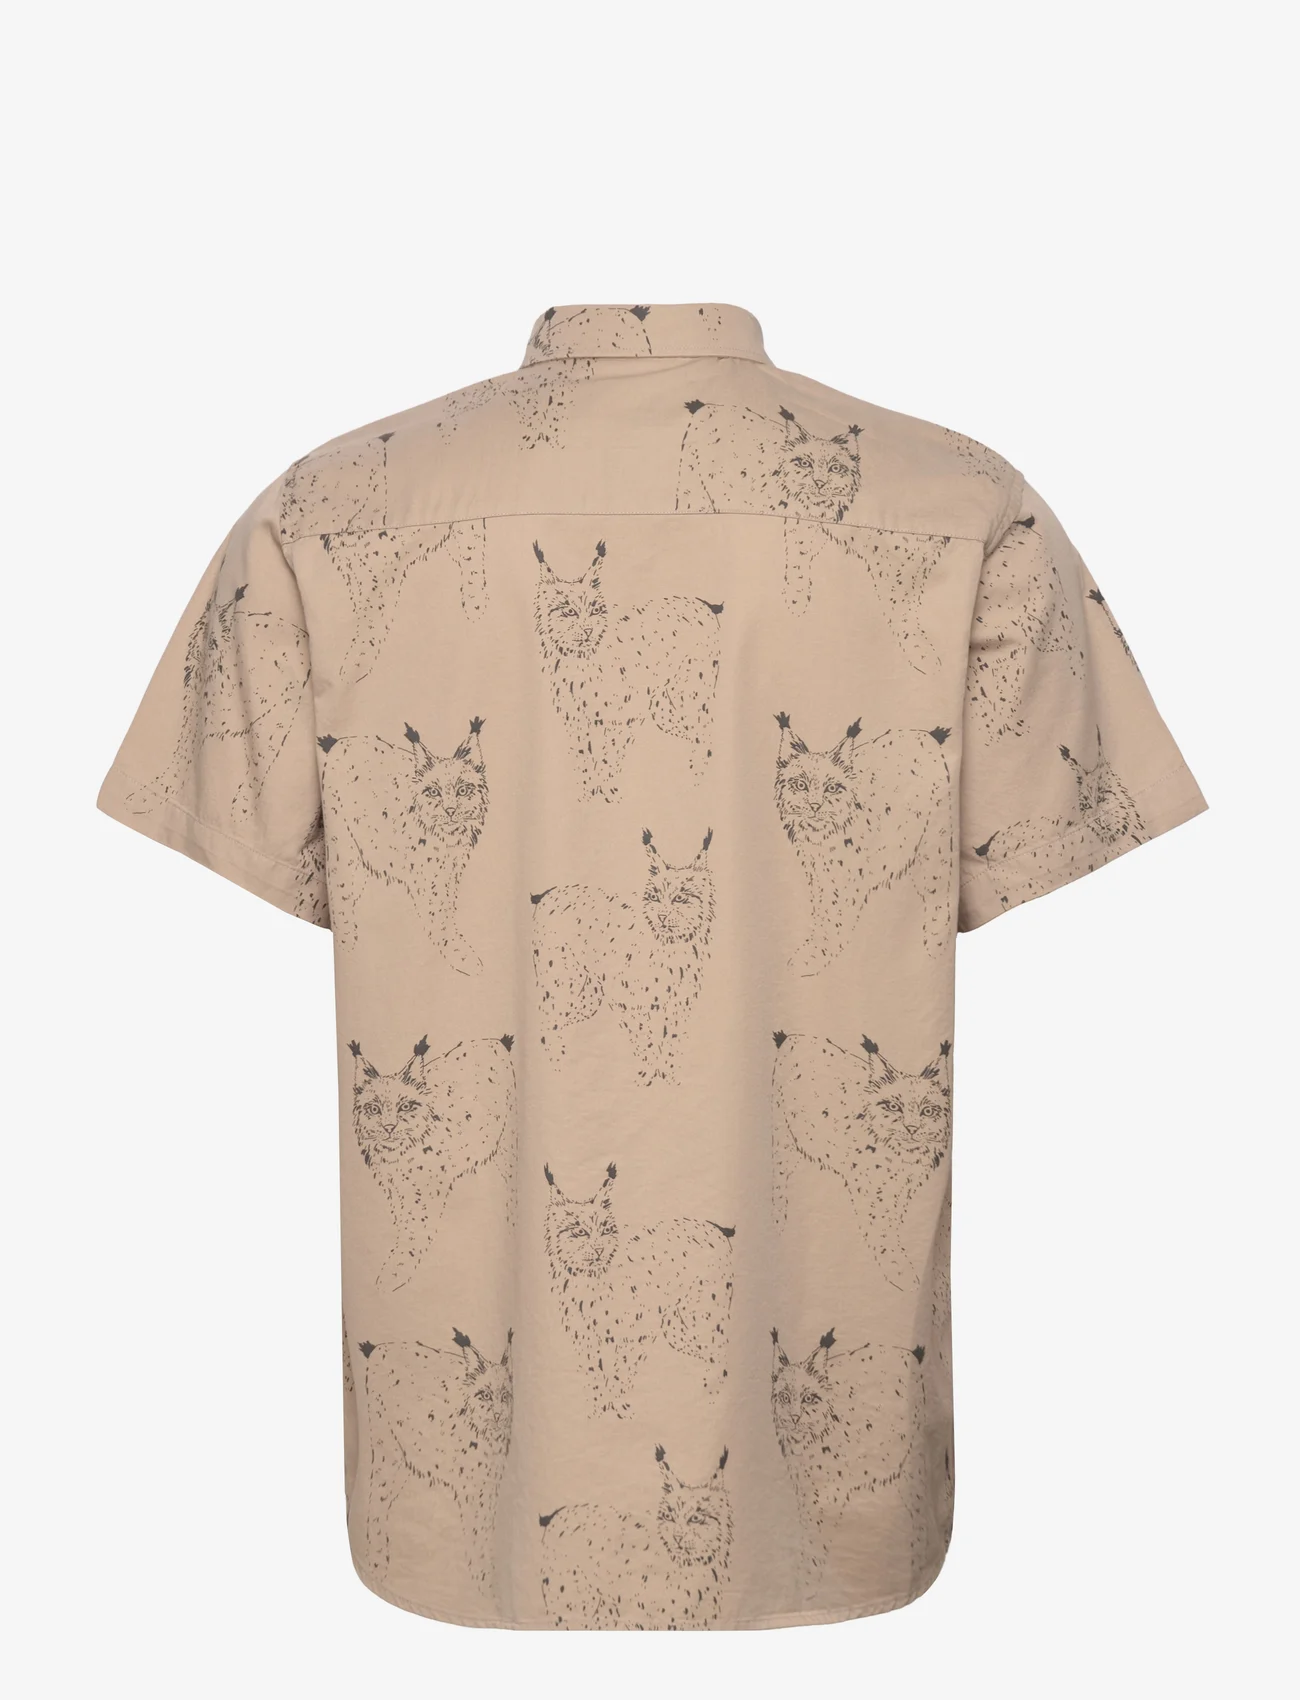 Makia - Lynx Shirt - kortermede t-skjorter - humus - 1